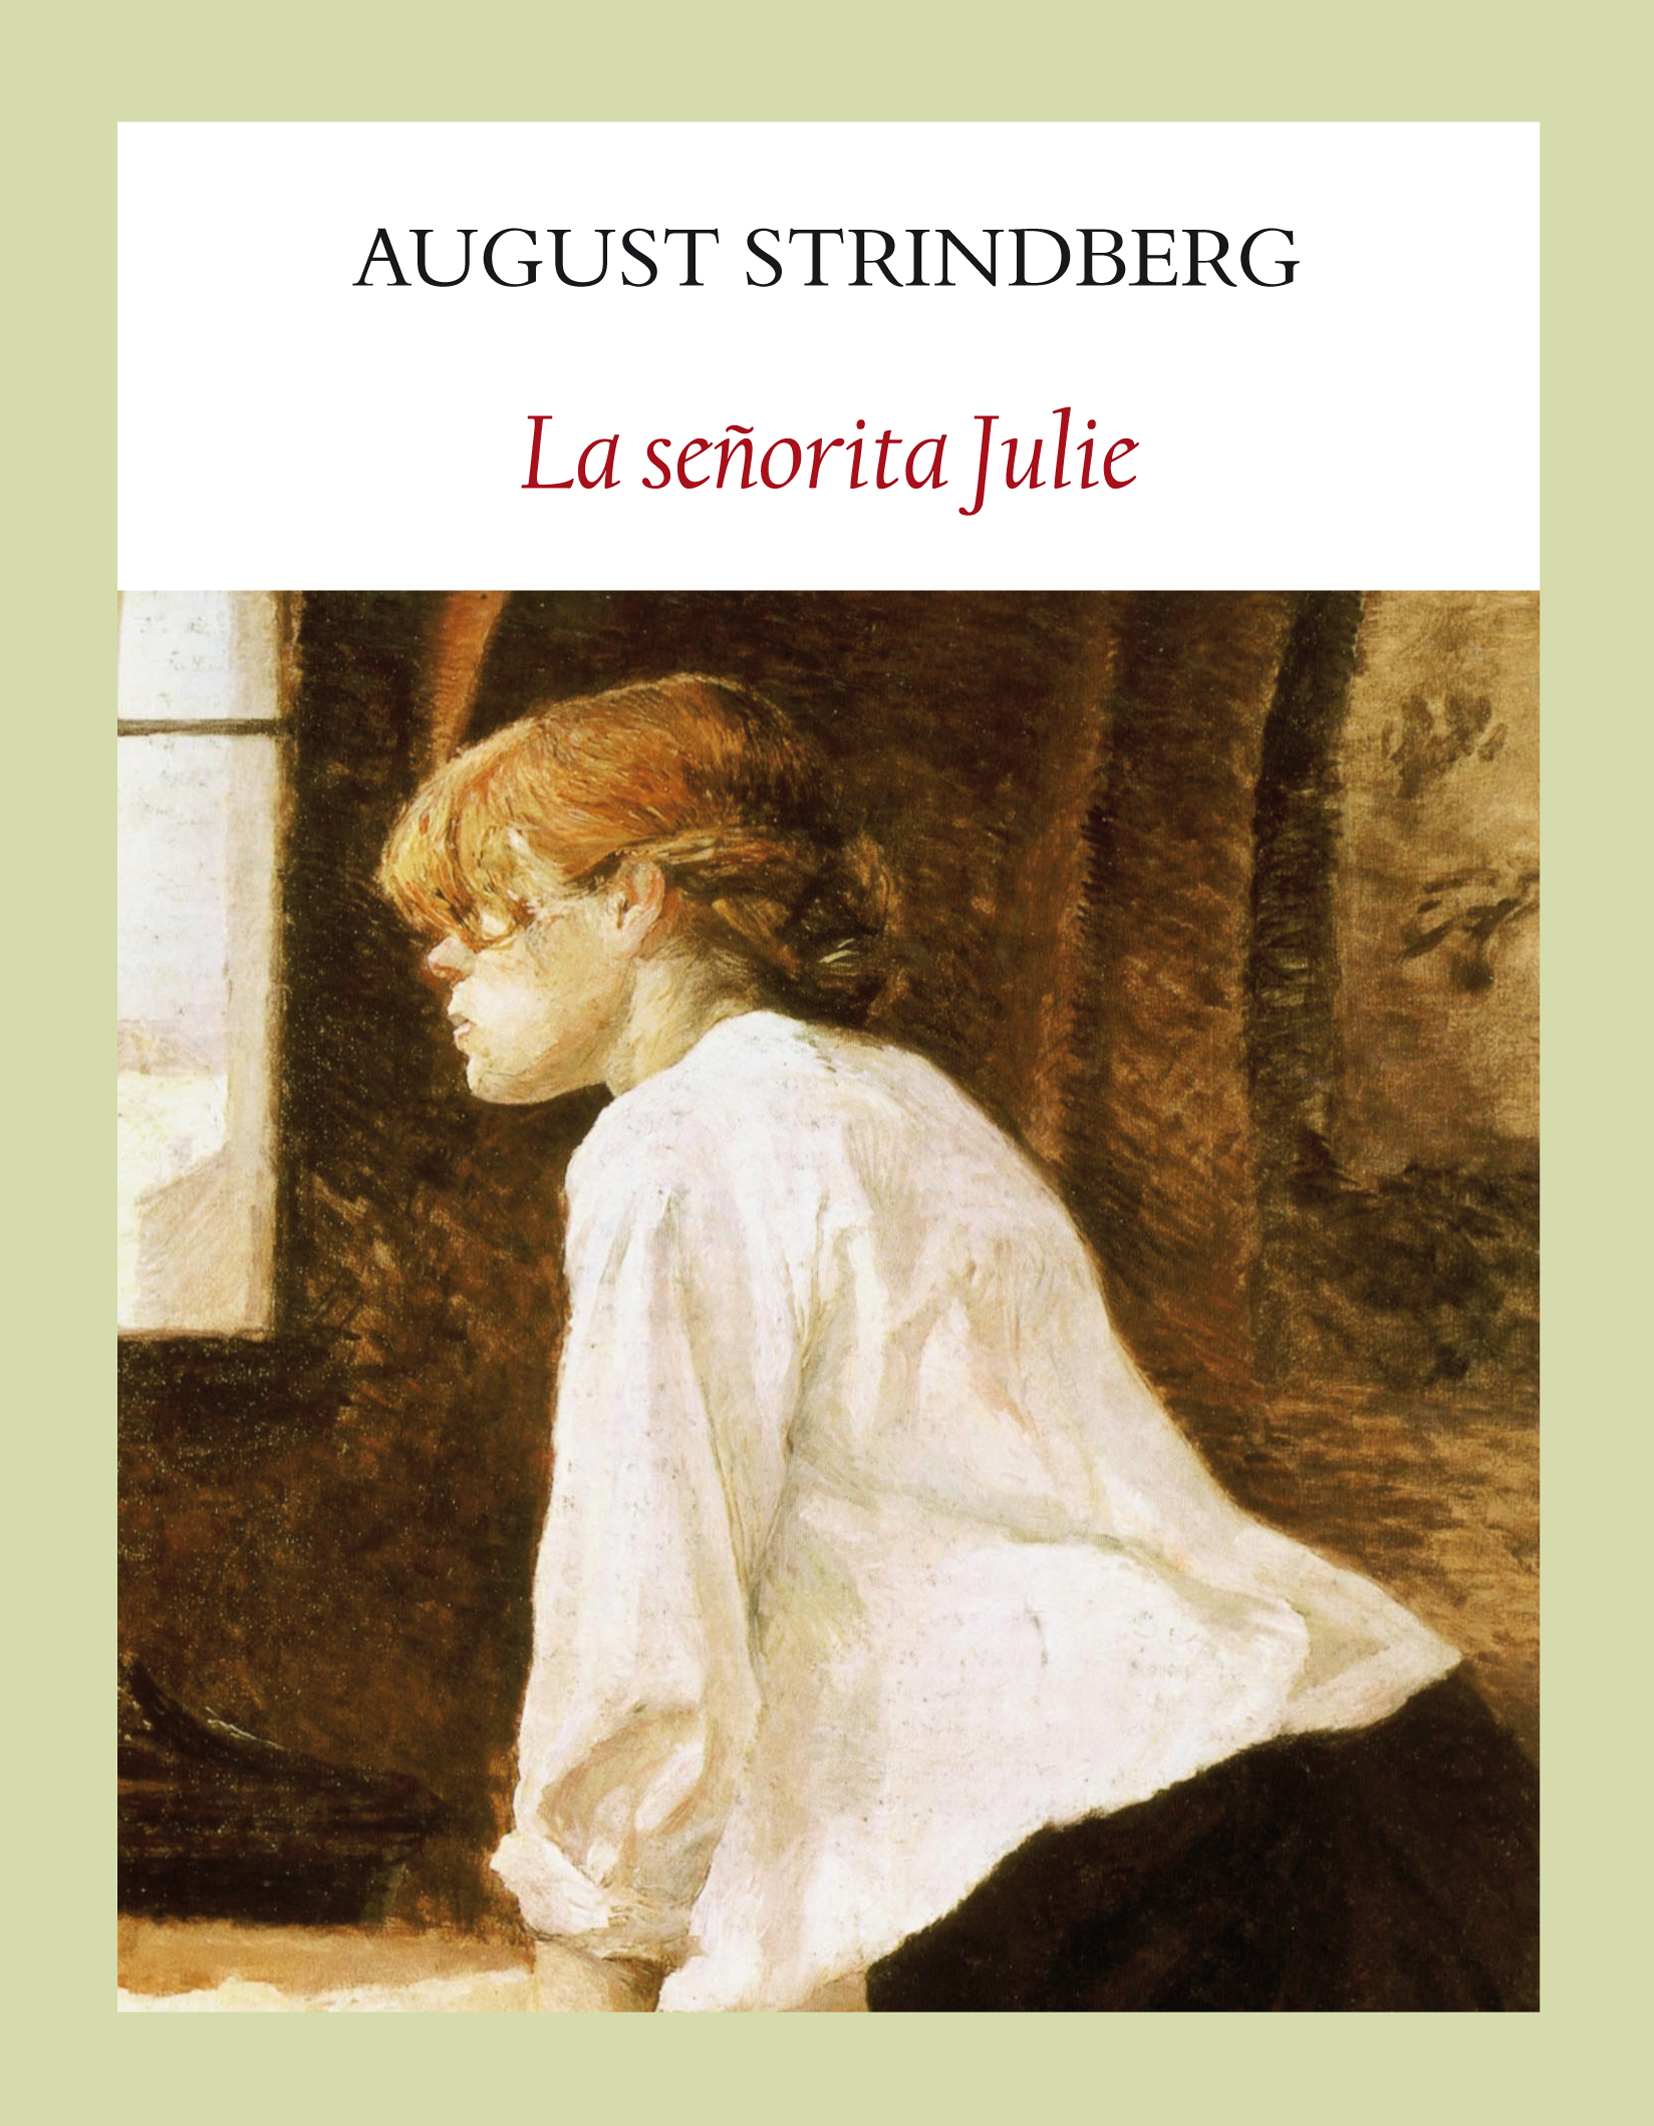 Strindberg, August archivos - Editorial Funambulista